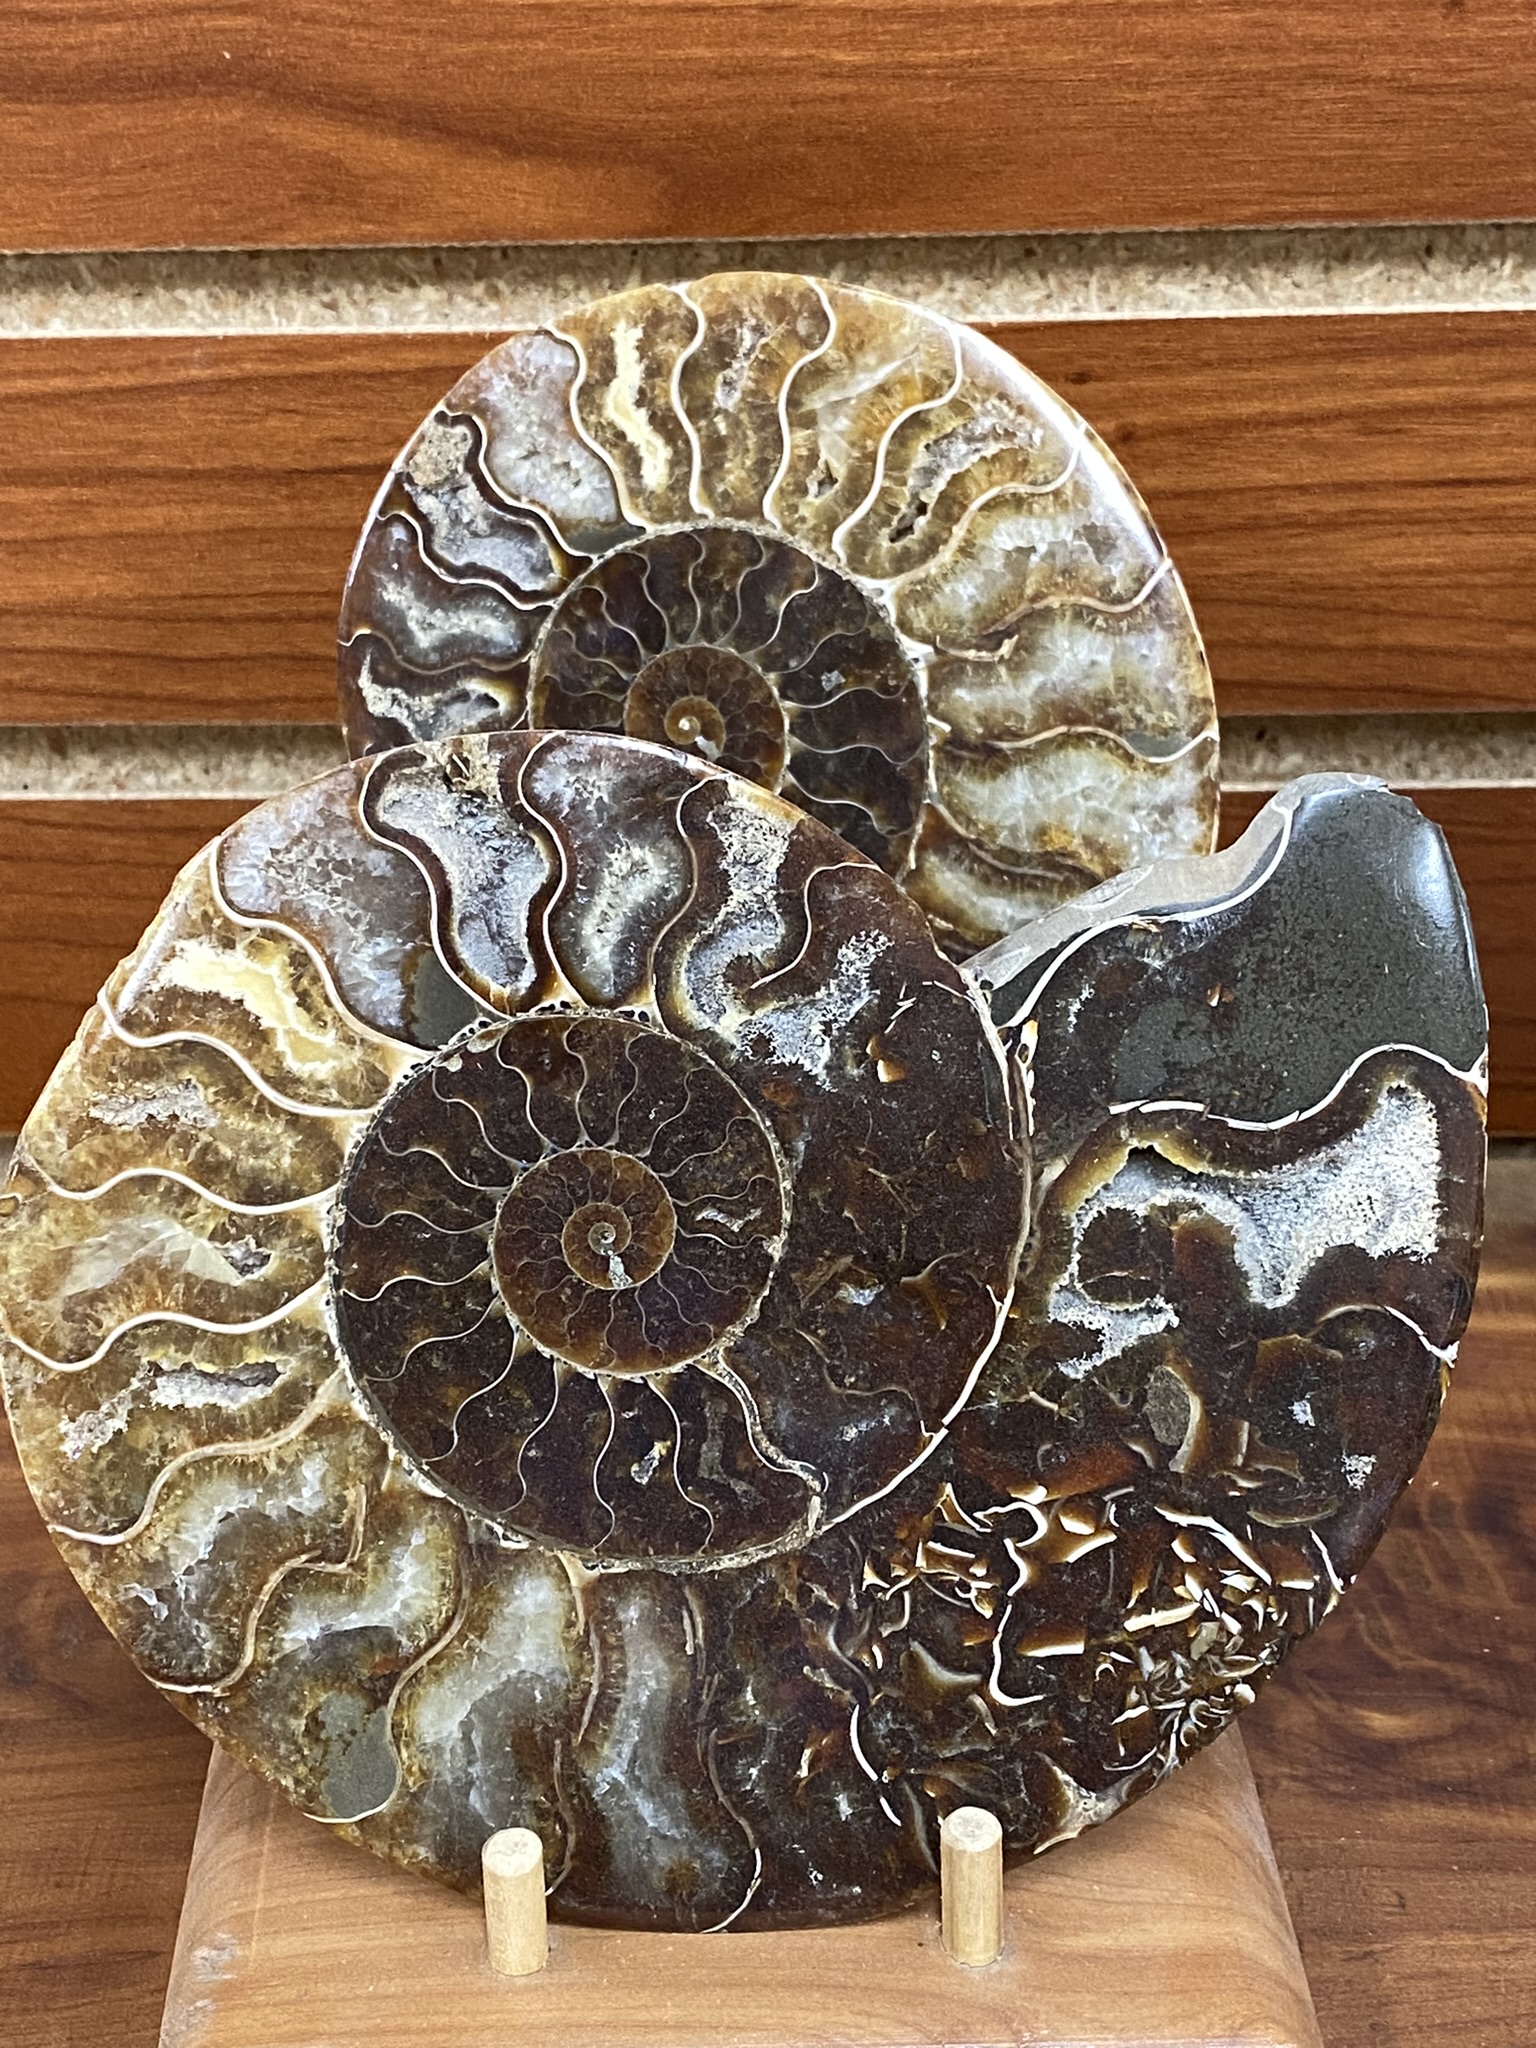 Ammonite halves